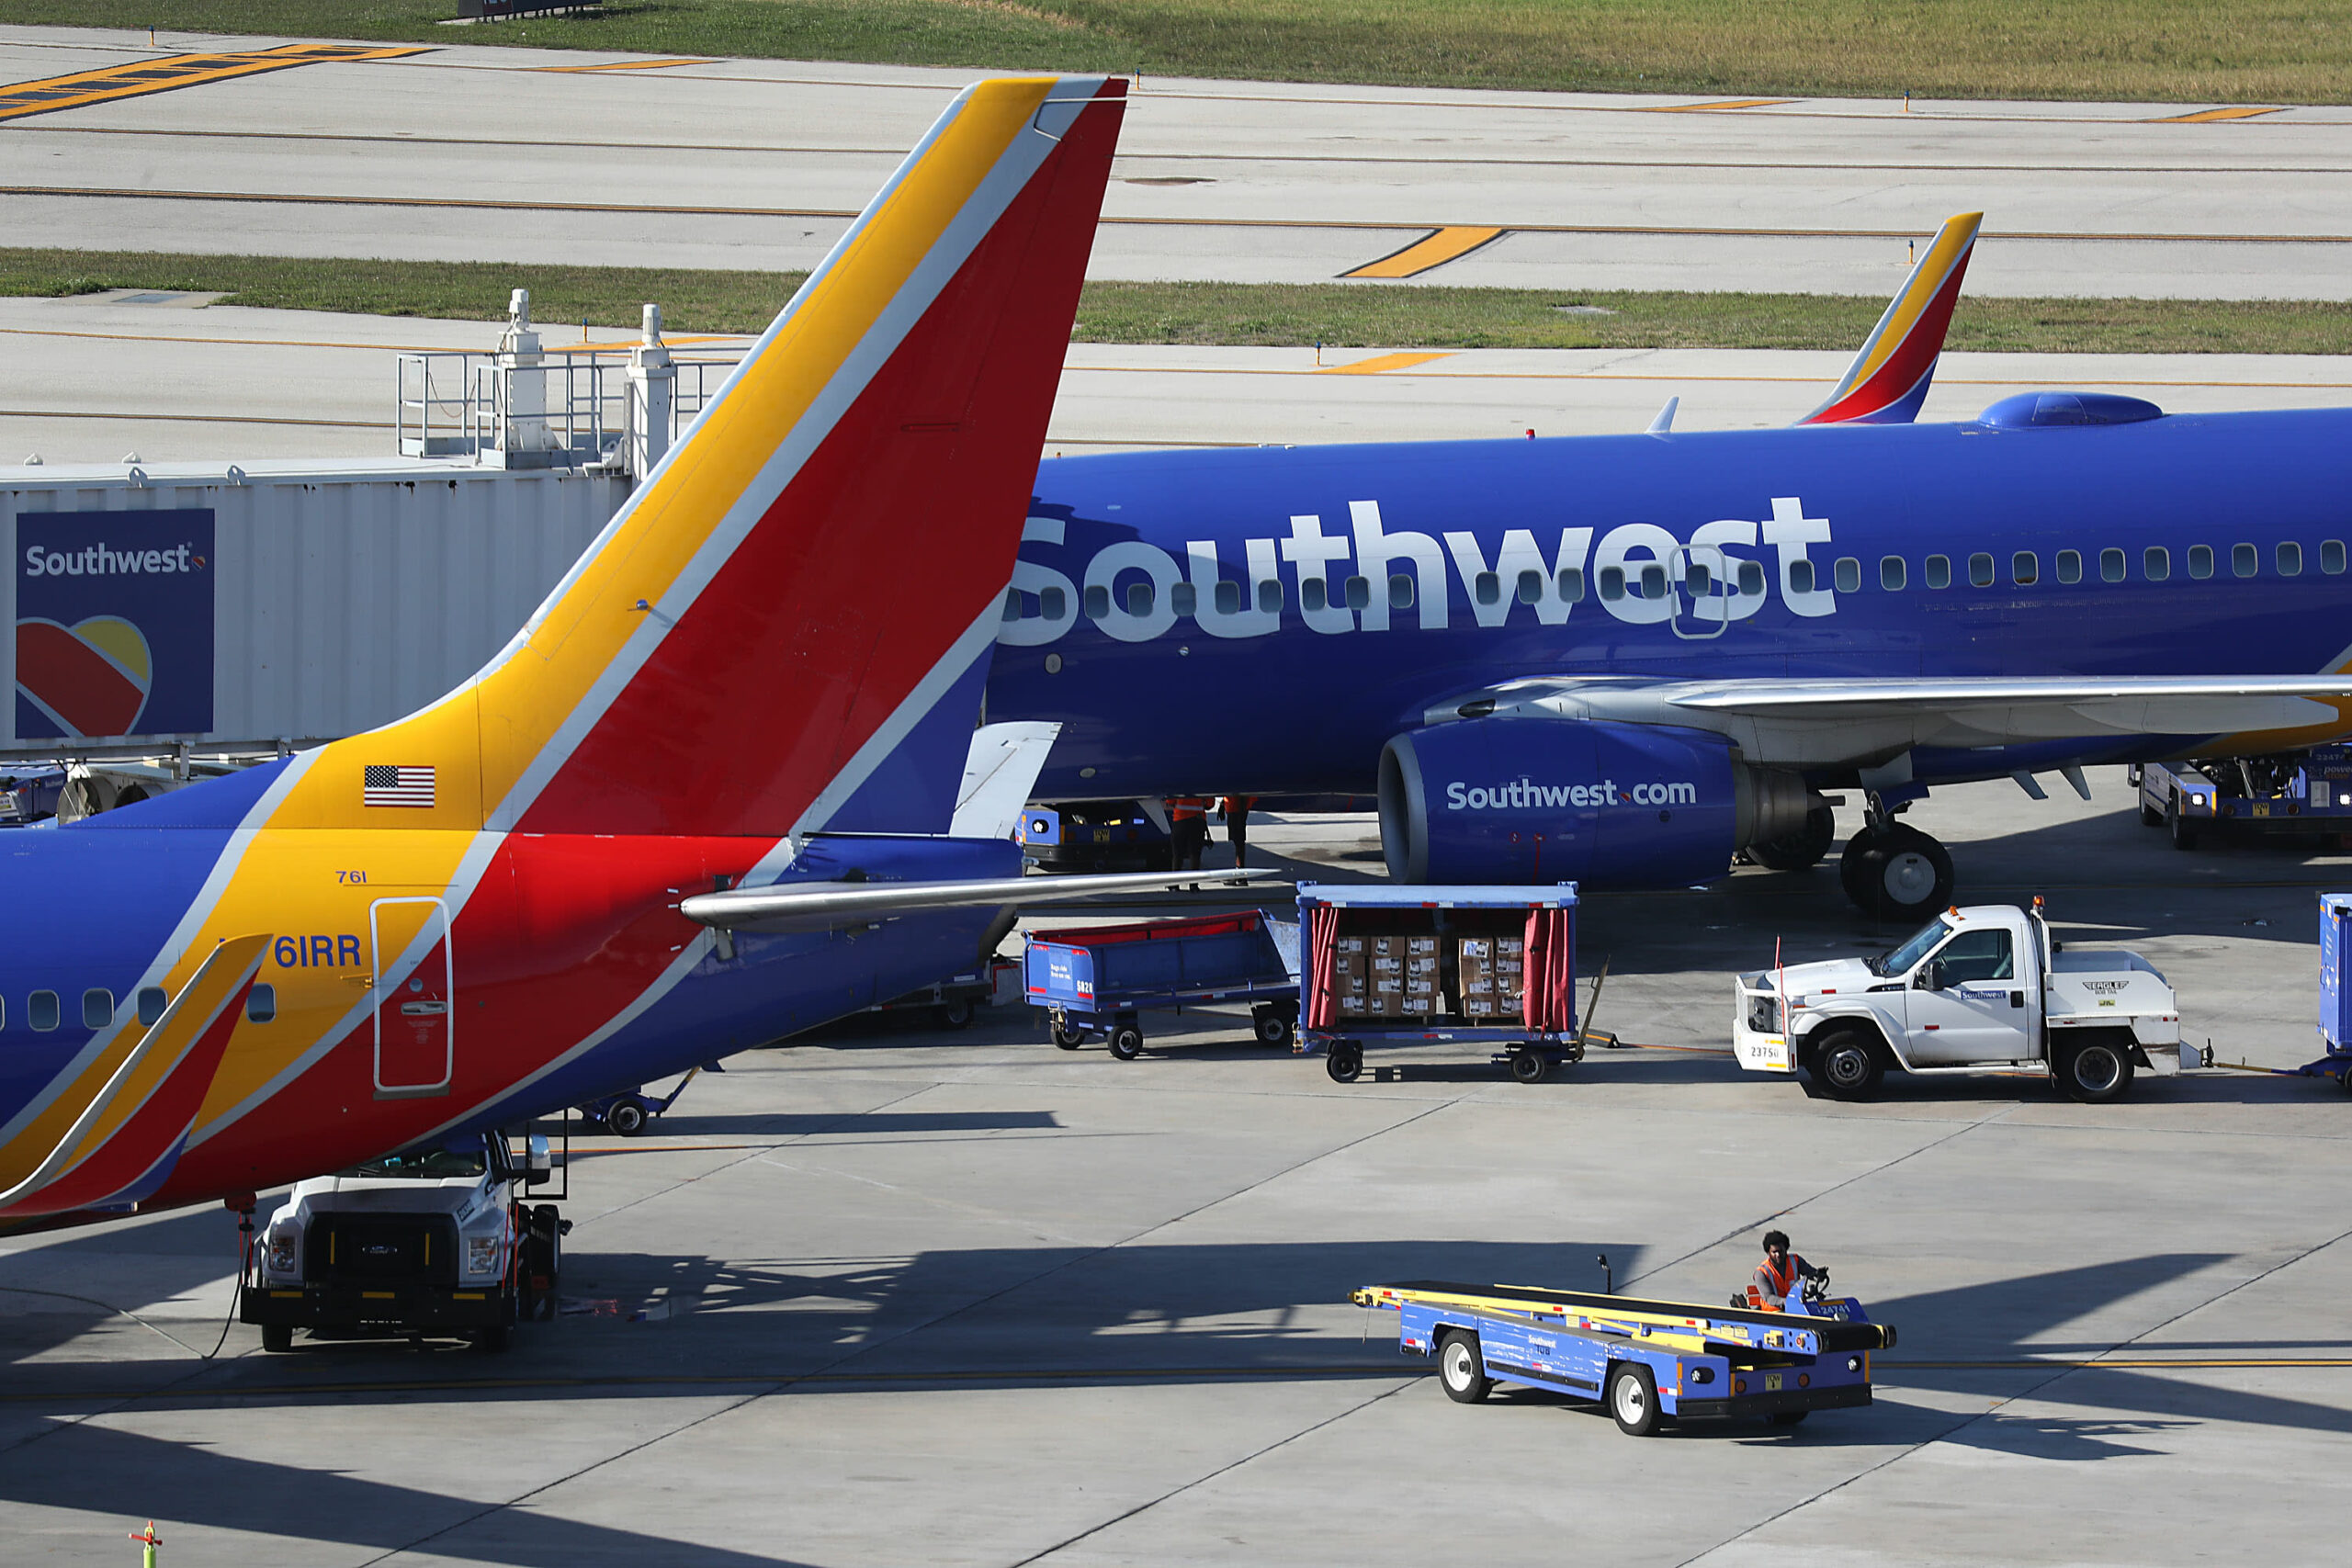 Southwest Airlines (LUV) posts Q2 loss, warns on weak demand because of coronavirus